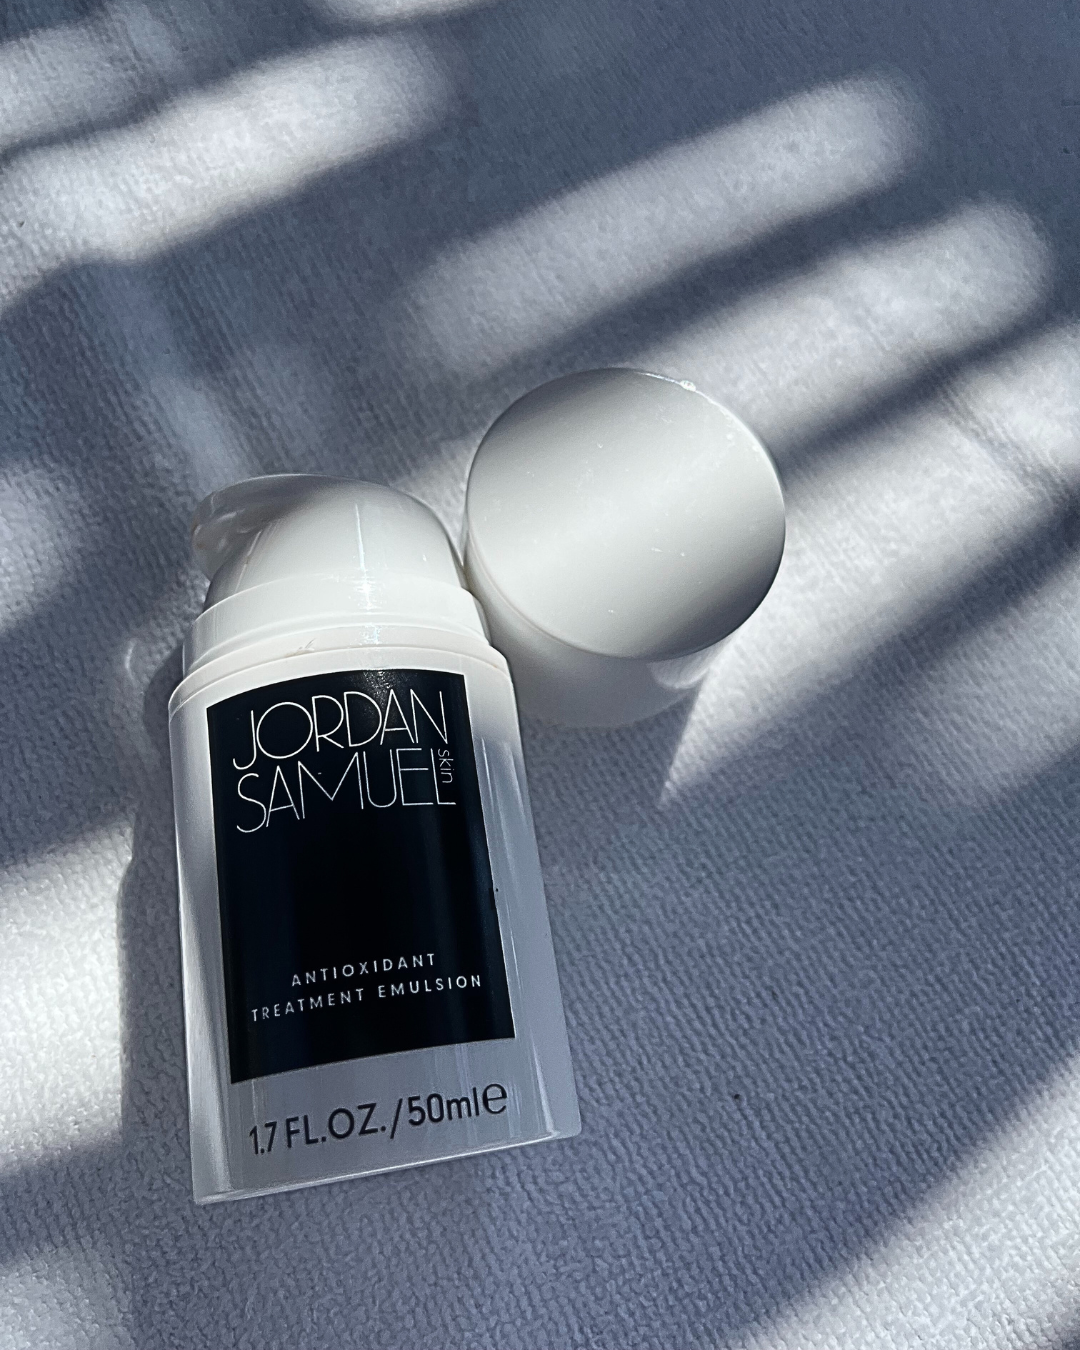 Antioxidant Treatment Emulsion lays on a white towel as sun streams through a pergola, casting it in shadows. 